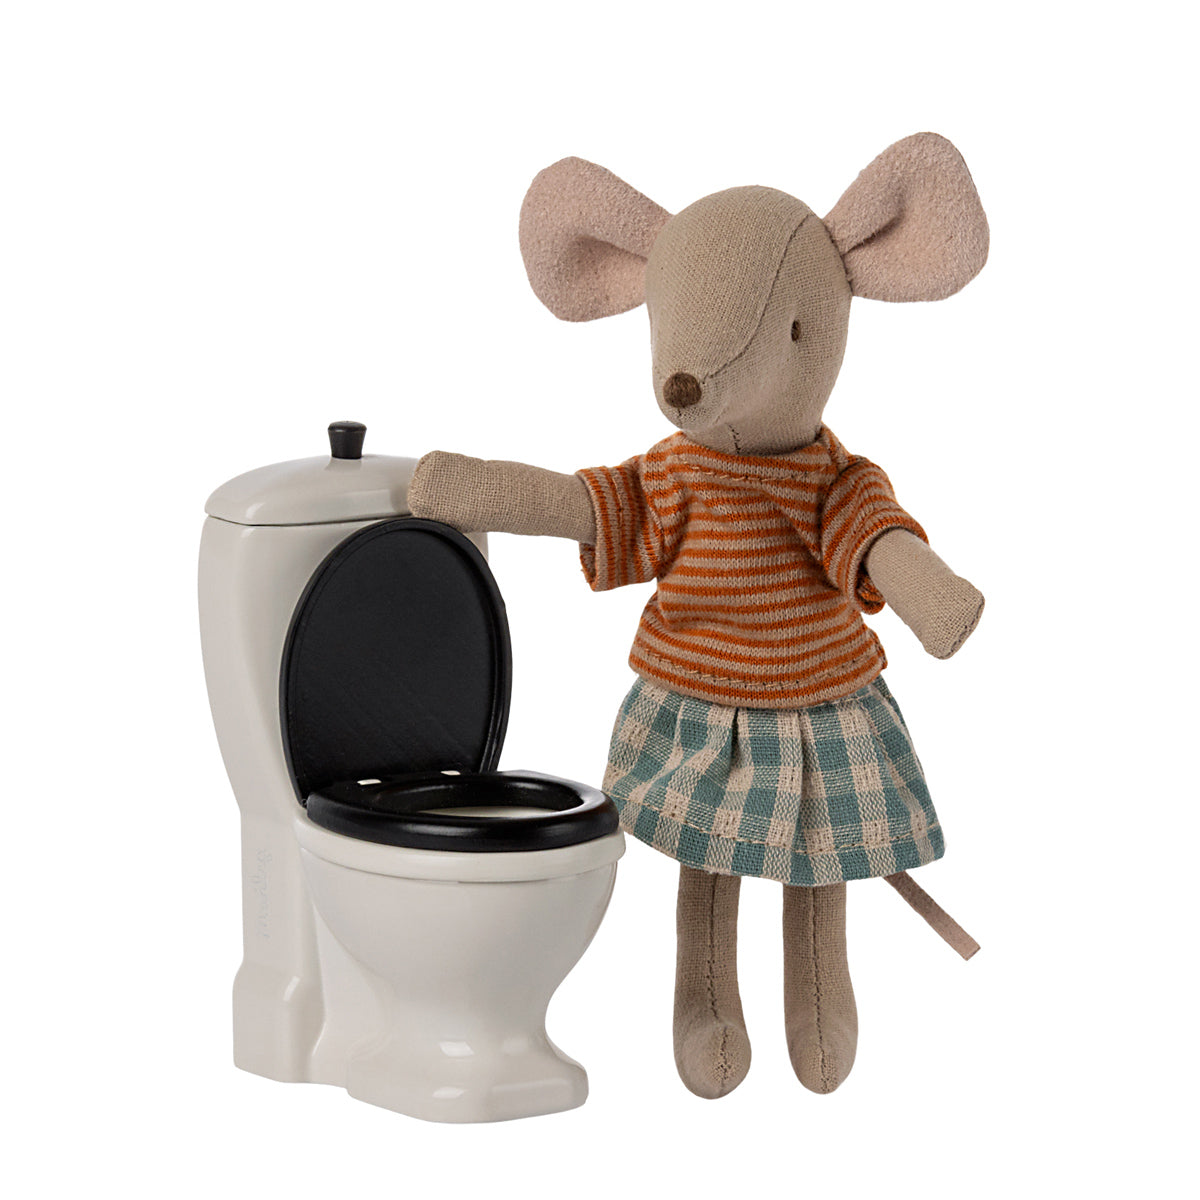 NEW Maileg Mouse Toilet